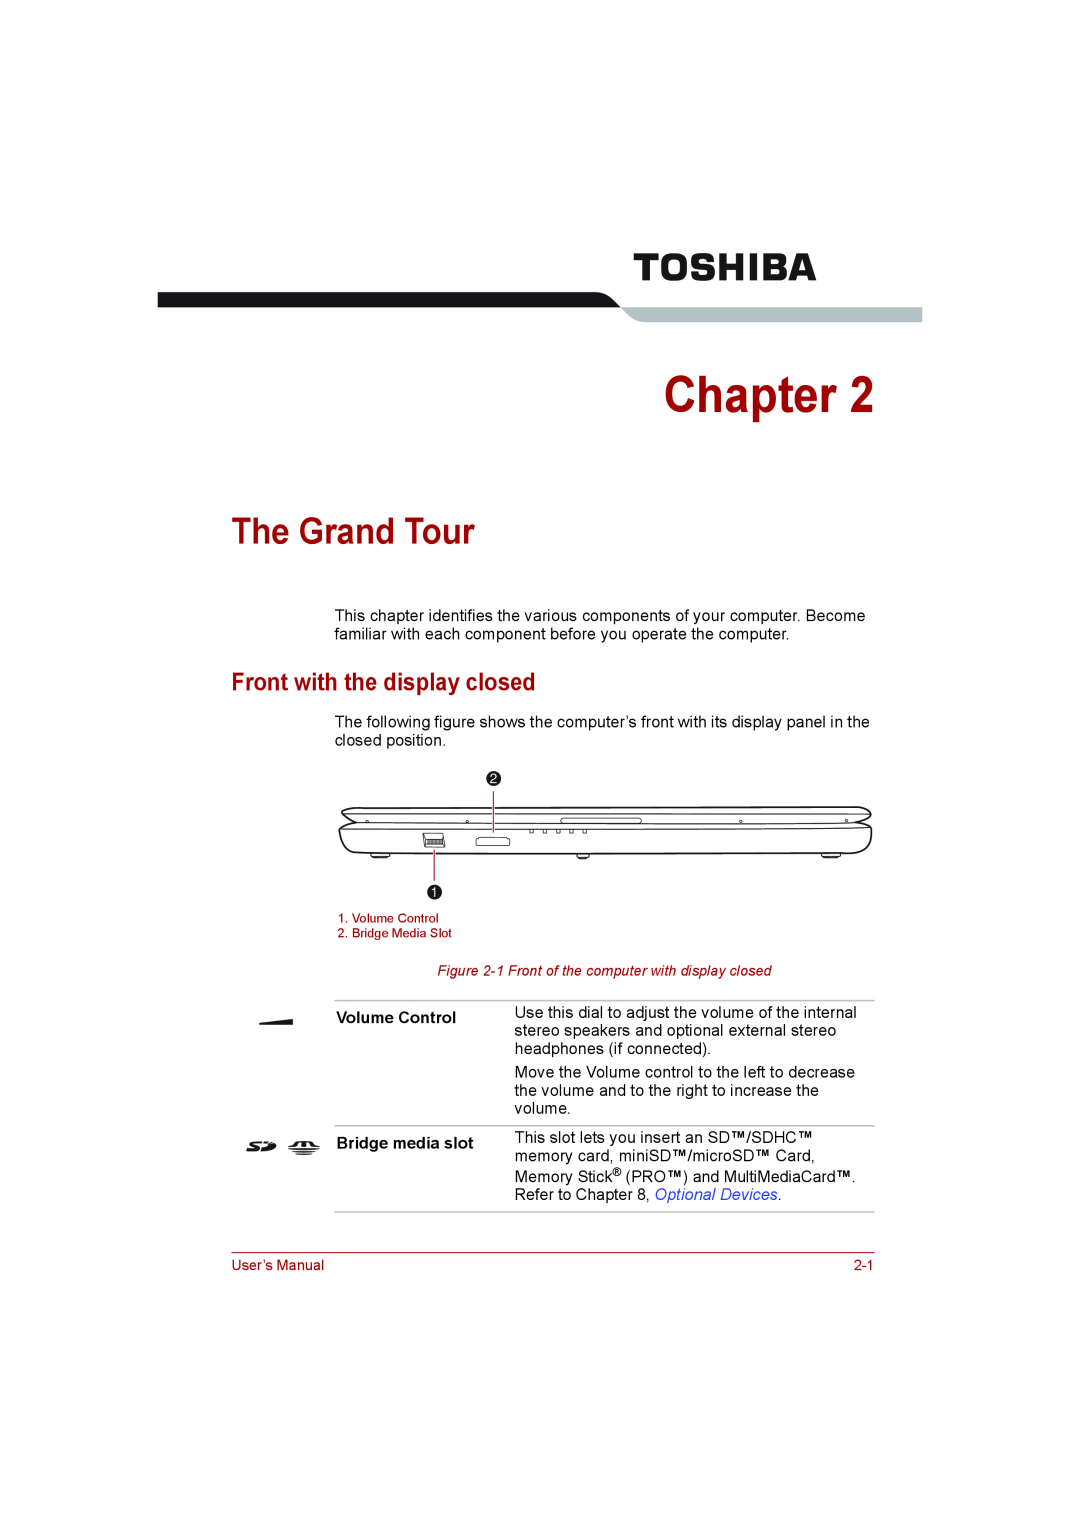 Toshiba toshiba satellite l550/ satellite pro l550/ satellite l550d/ satellite pro l550d series The Grand Tour, Chapter 